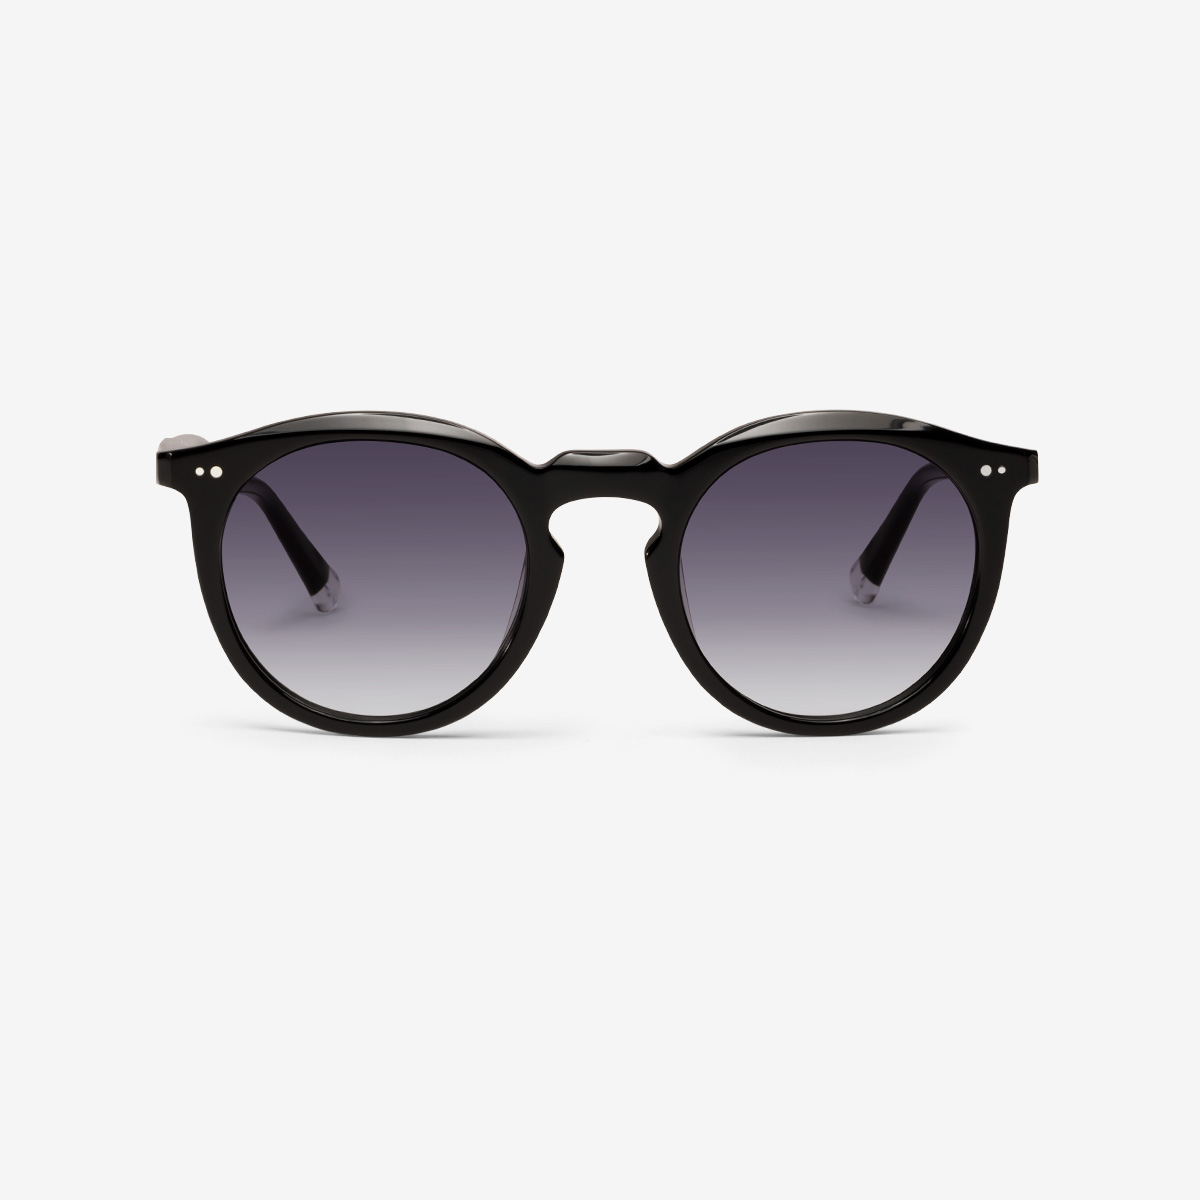 Nooz Optics | Reading glasses | Sunglasses | Blue Light glasses